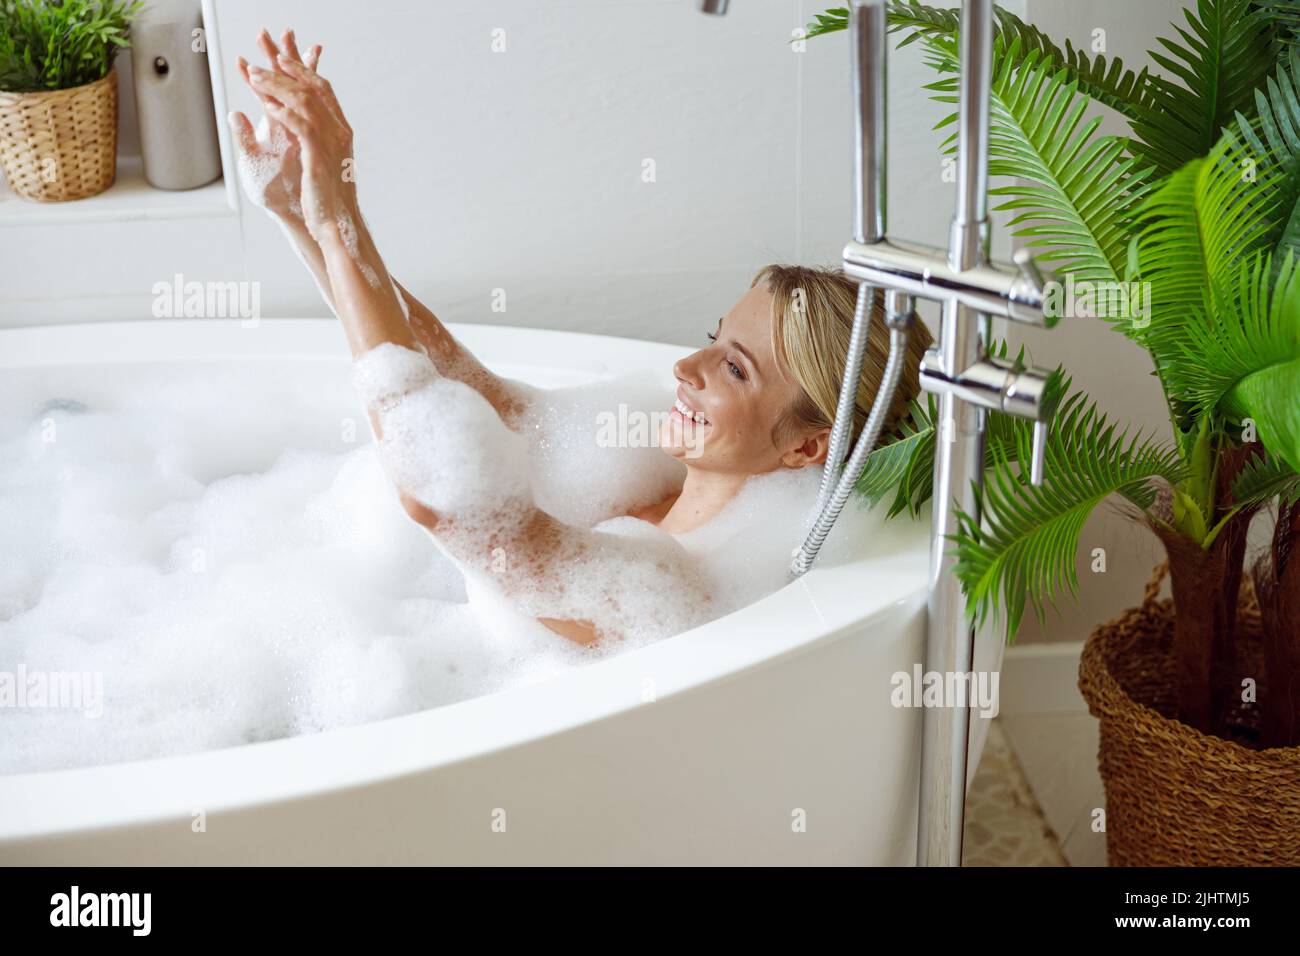 Woman taking relaxing bath Stock Photo by ©belchonock 138135236